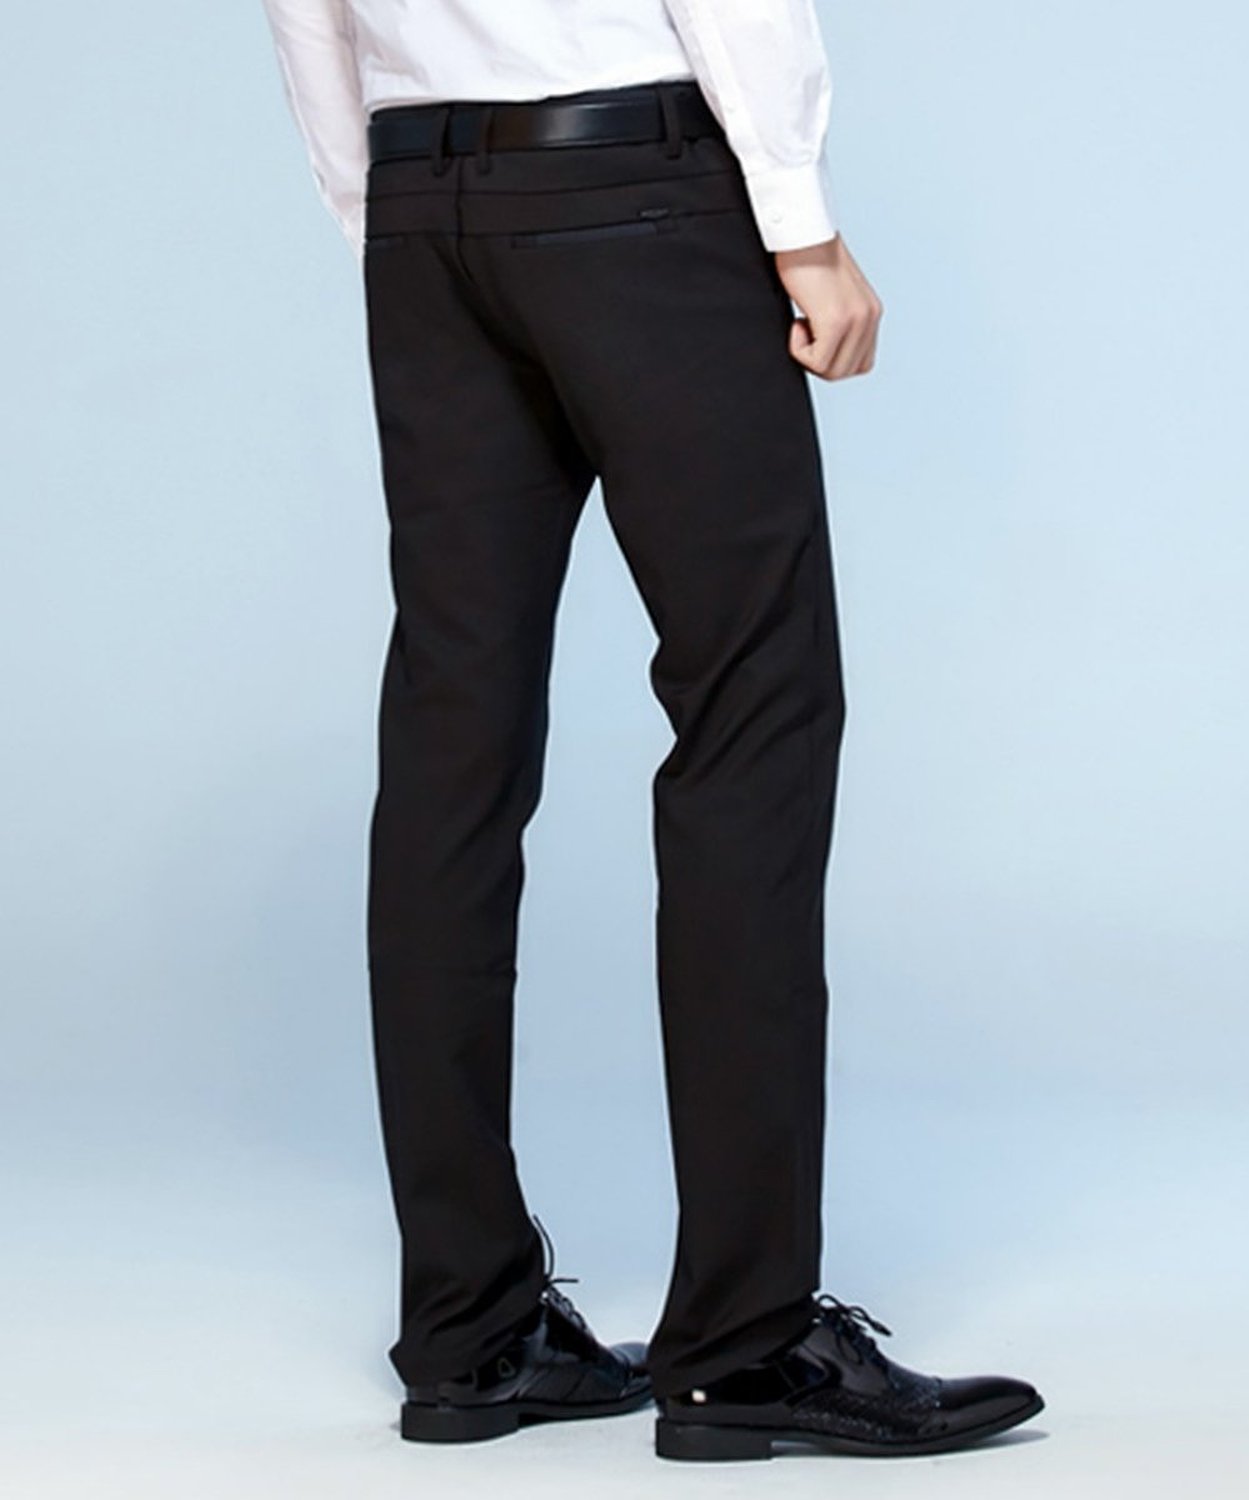 Pxs Men's Casual Fashion Slim Fit Skinny Trousers Pants Black